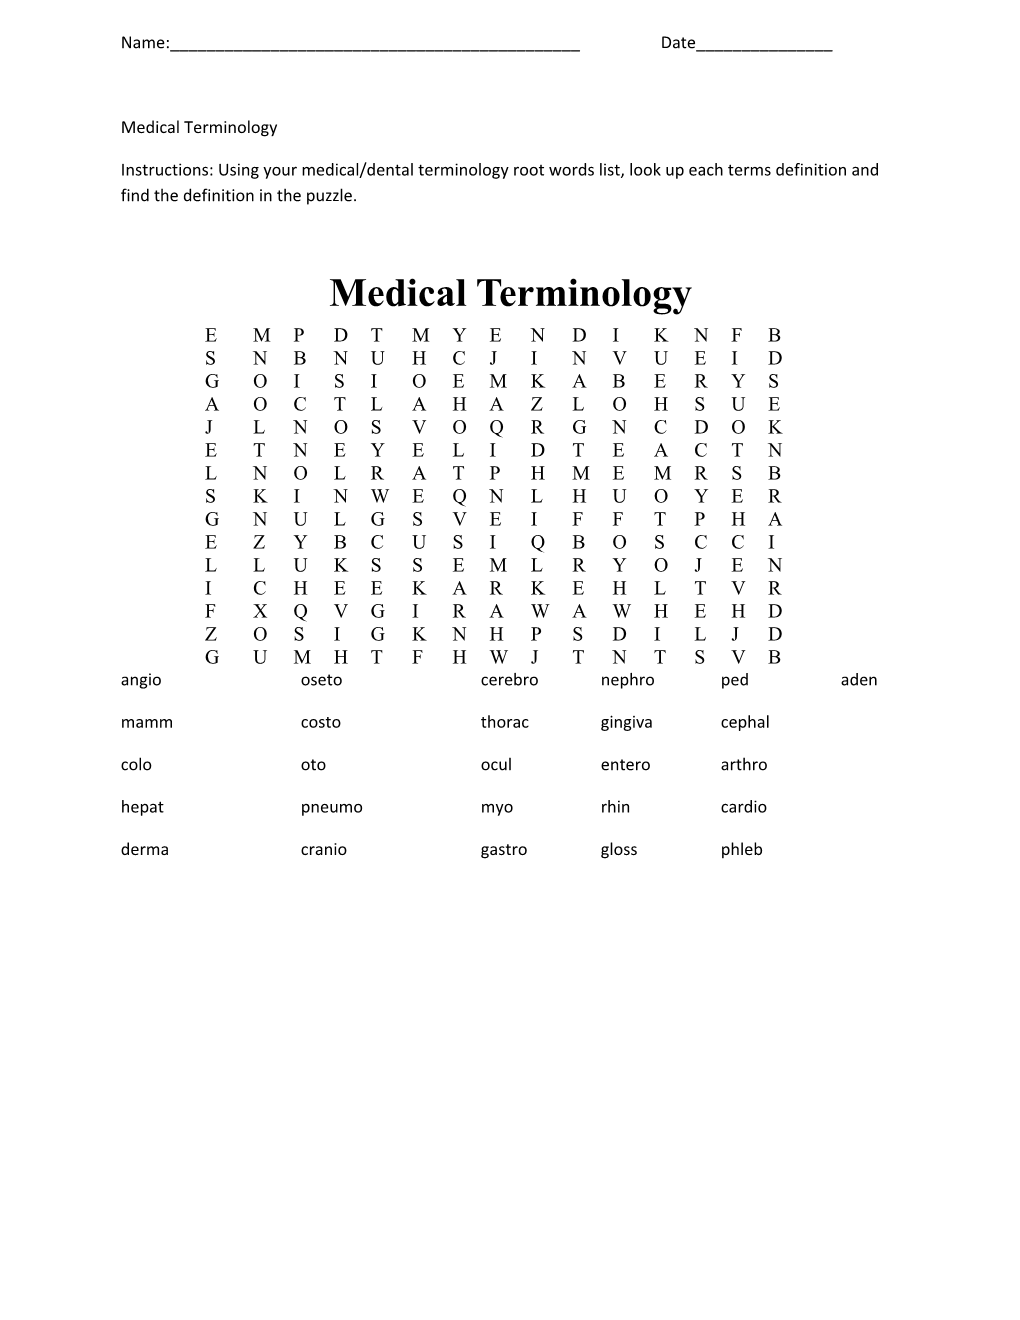 Medical Terminology s2